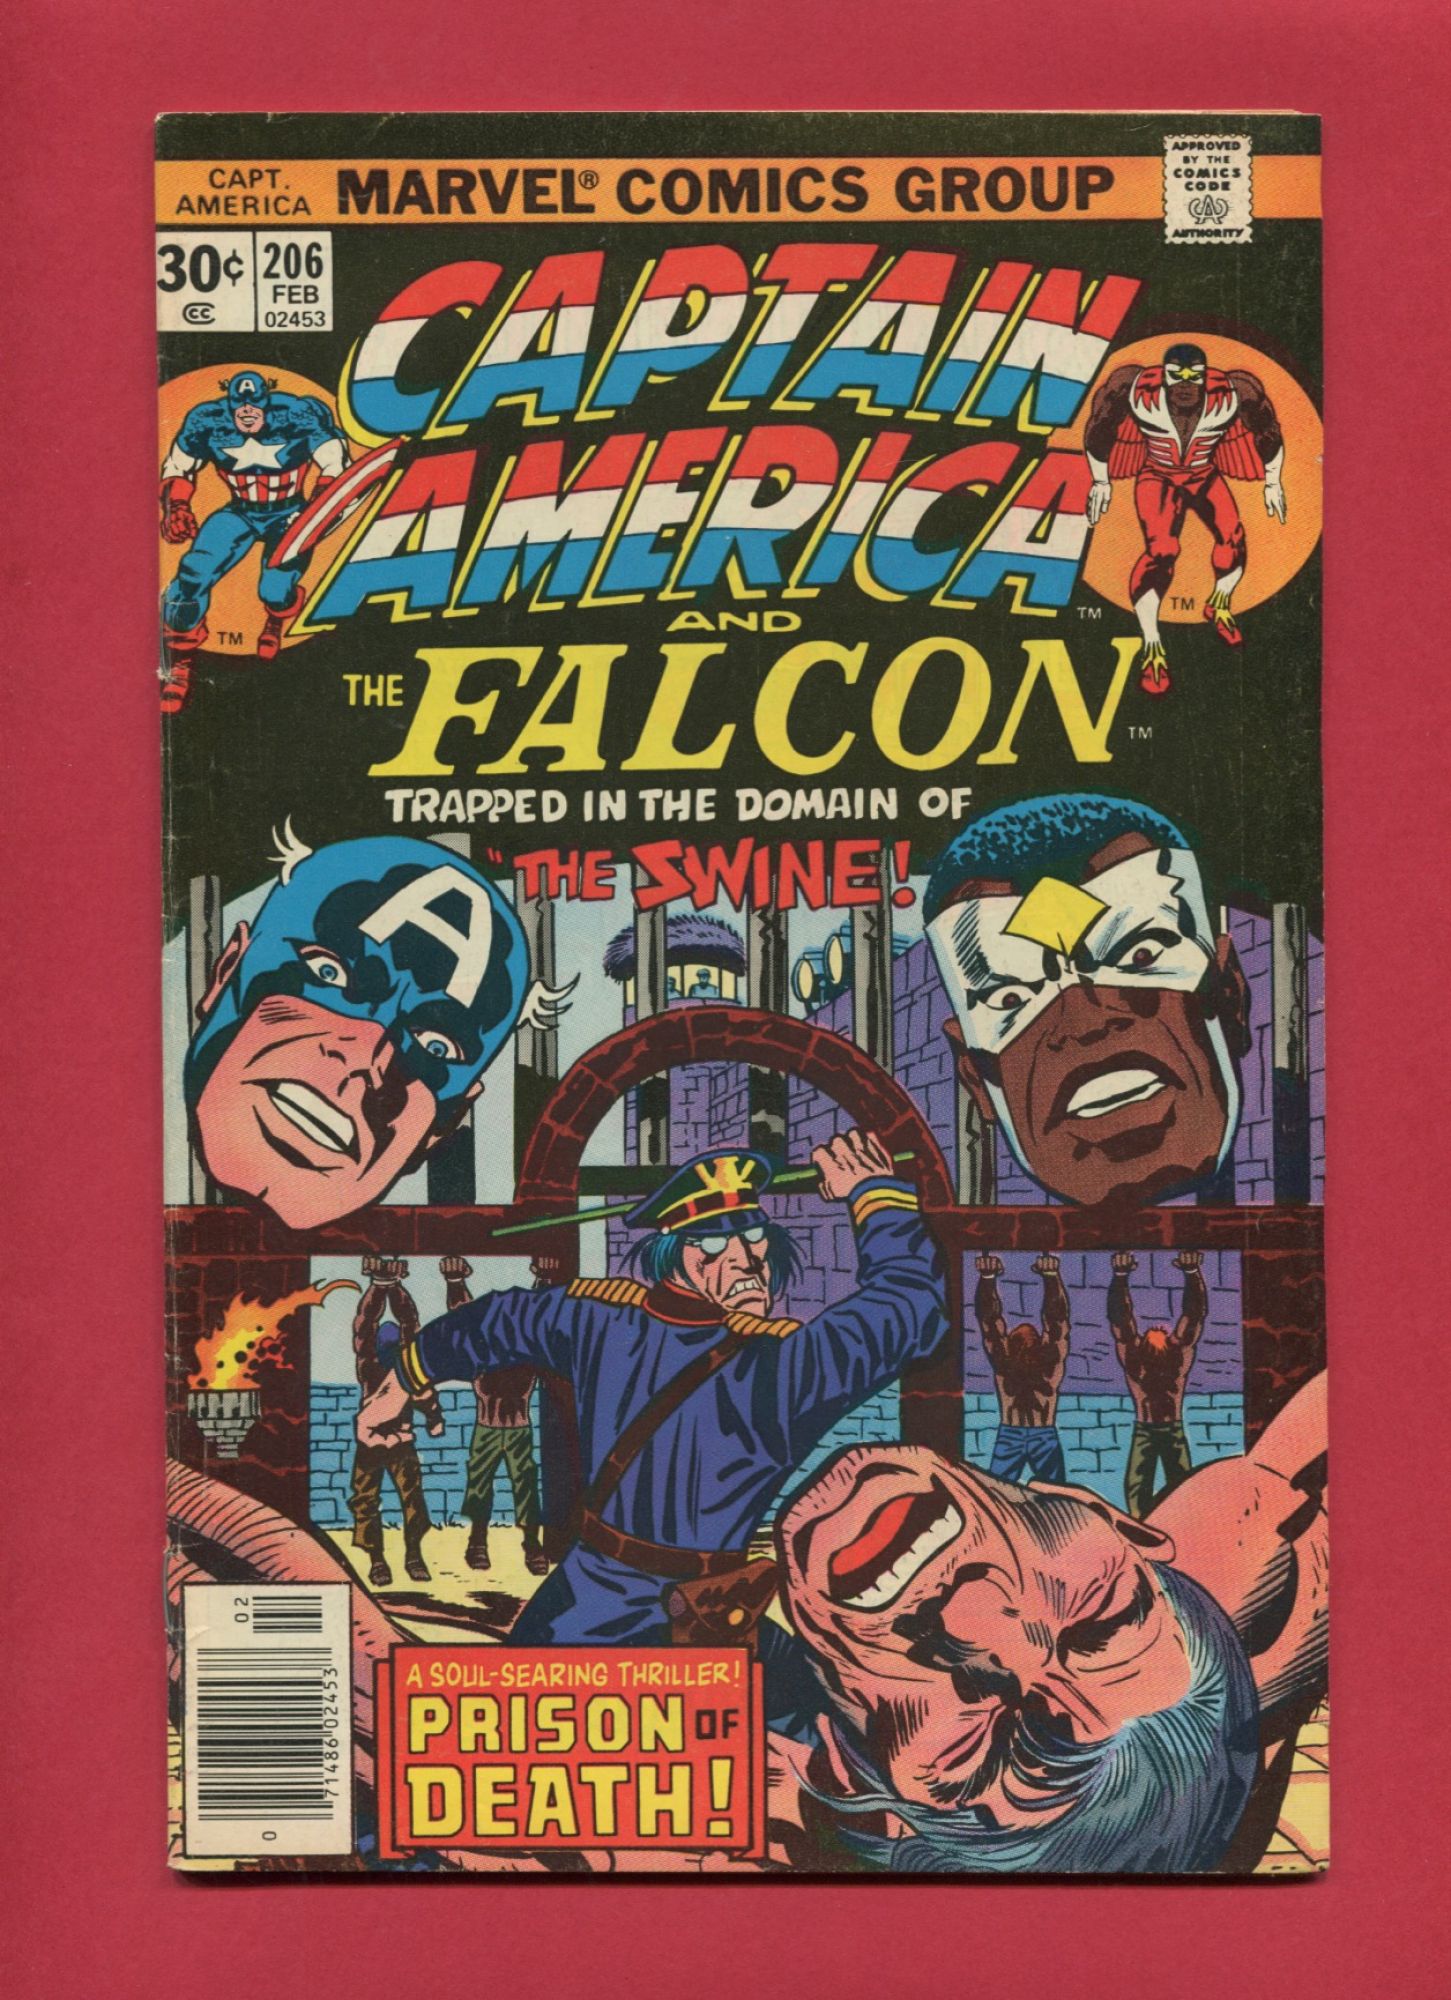 Captain America #206, Feb 1977, 6.5 FN+